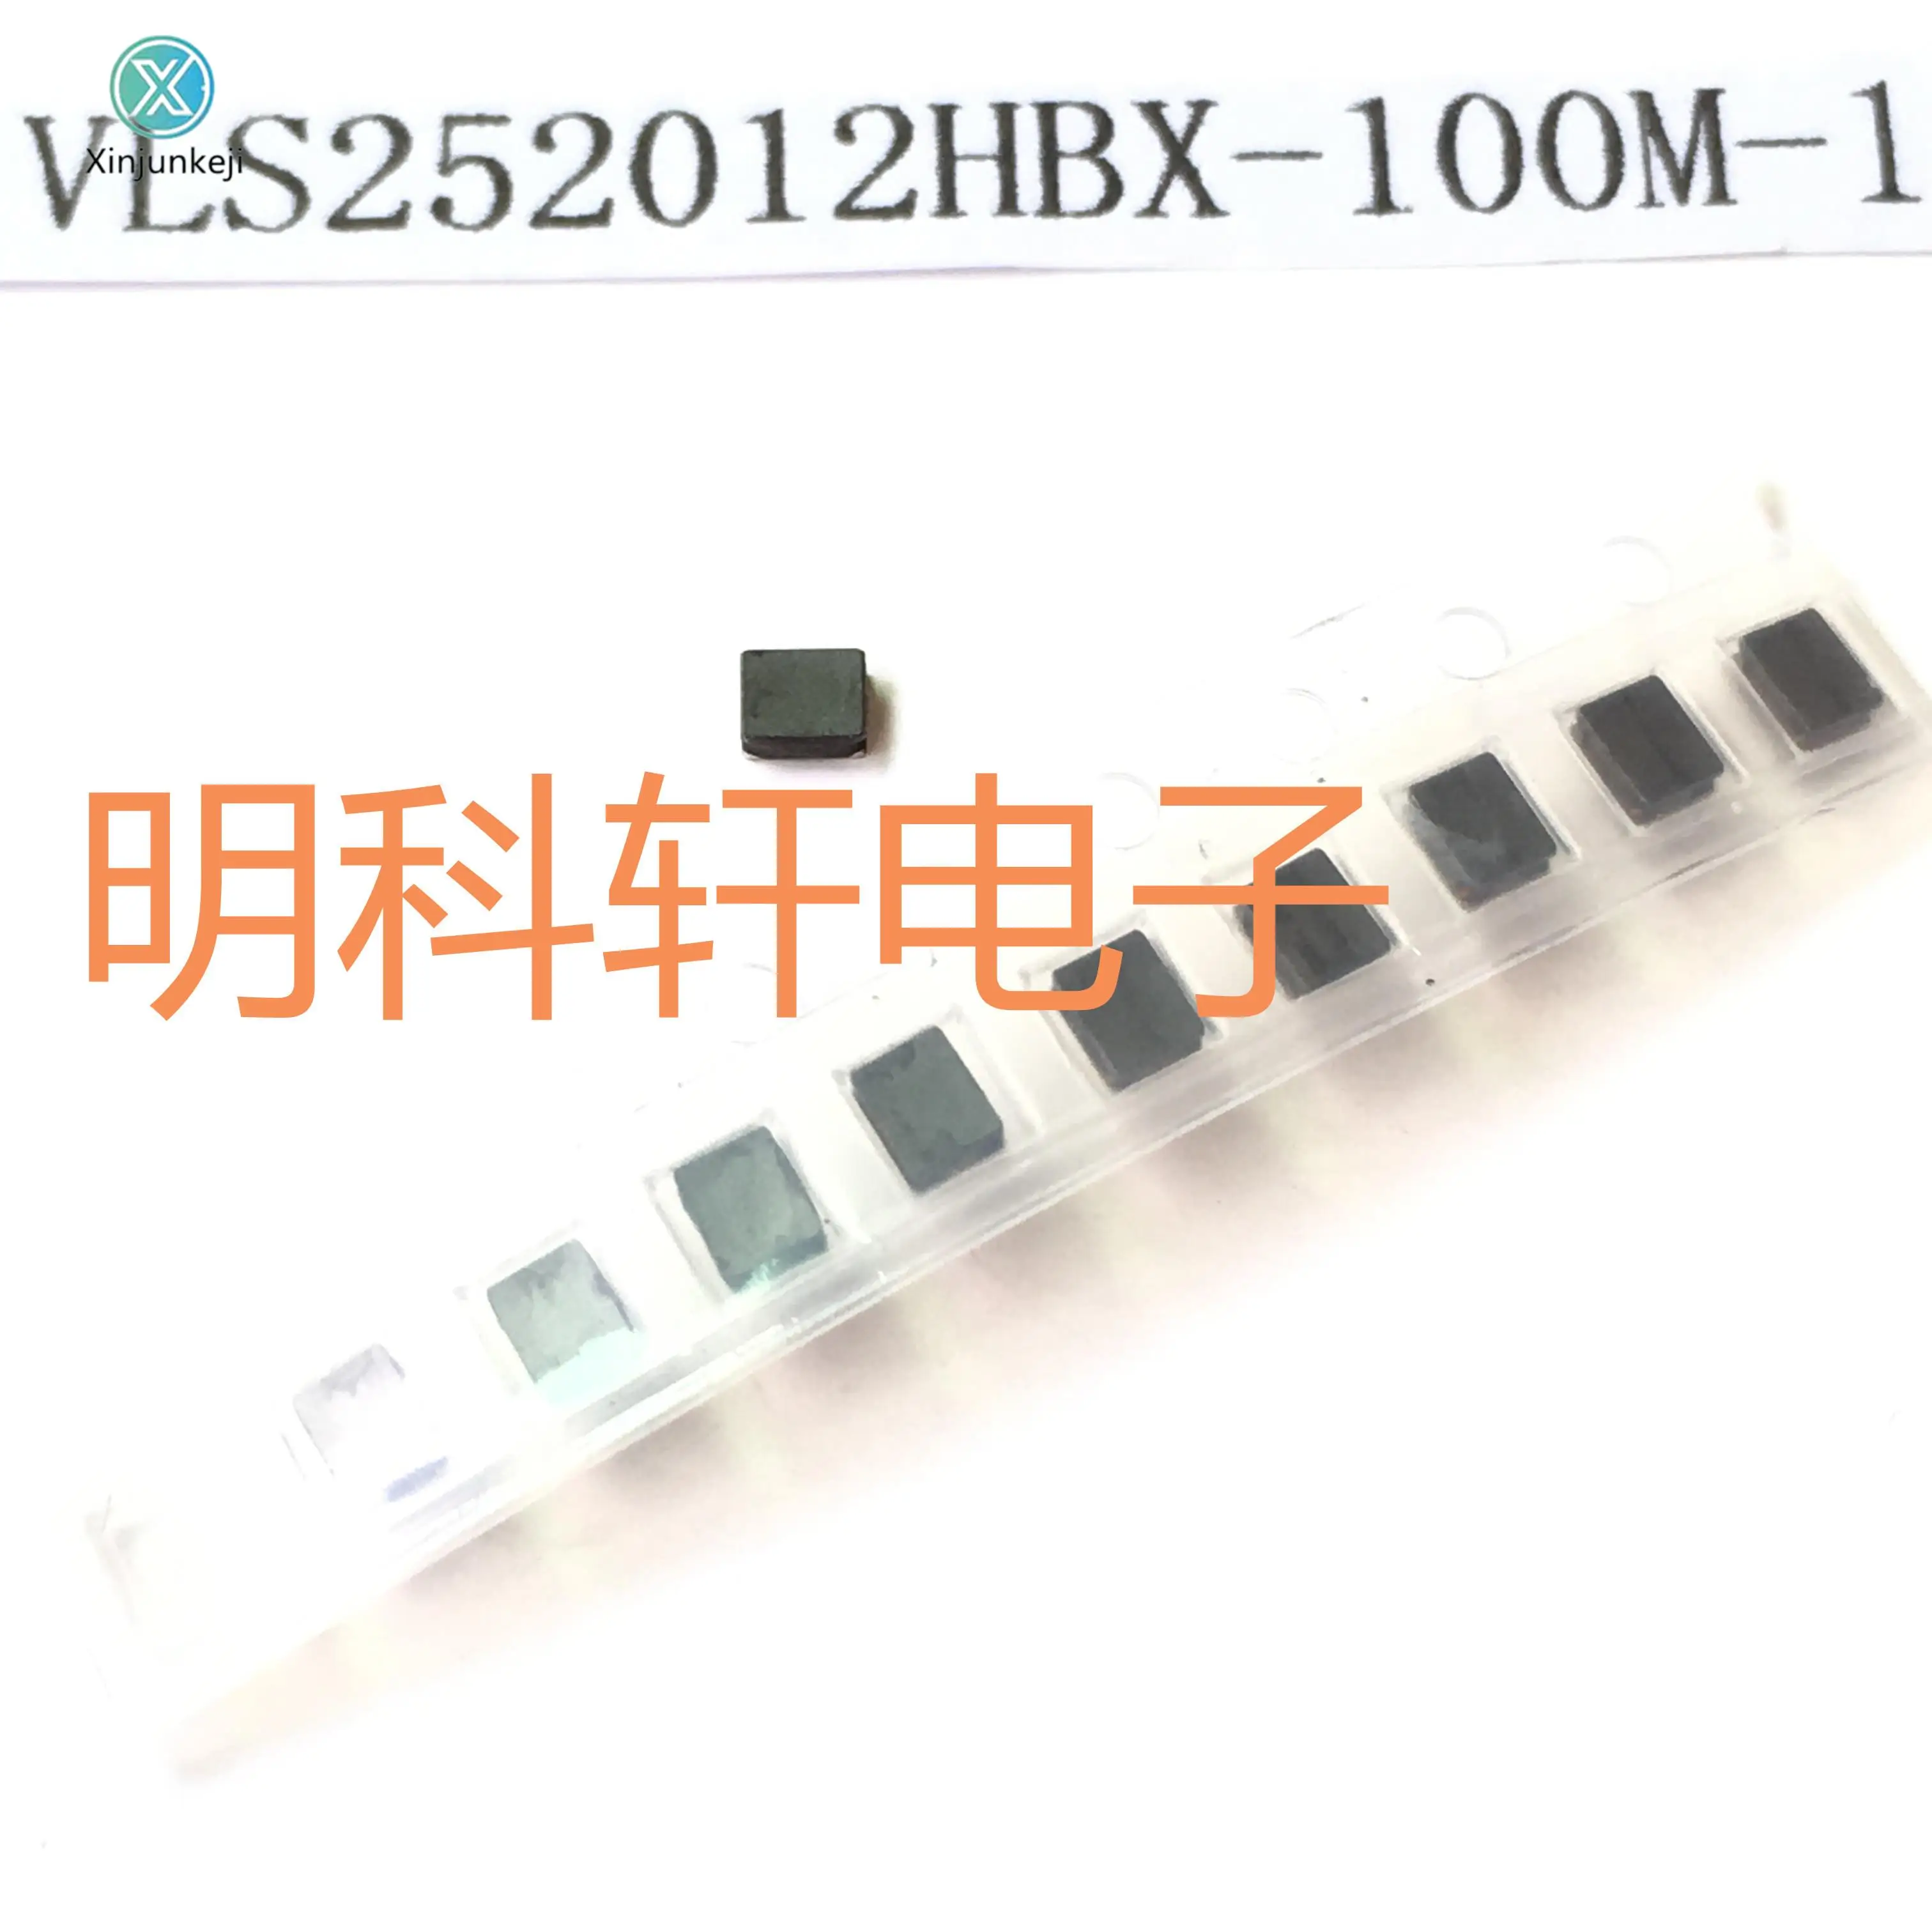 

30pcs orginal new VLS252012HBX-100M-1 SMD power inductor 10UH 2.5*2.0*1.2mm